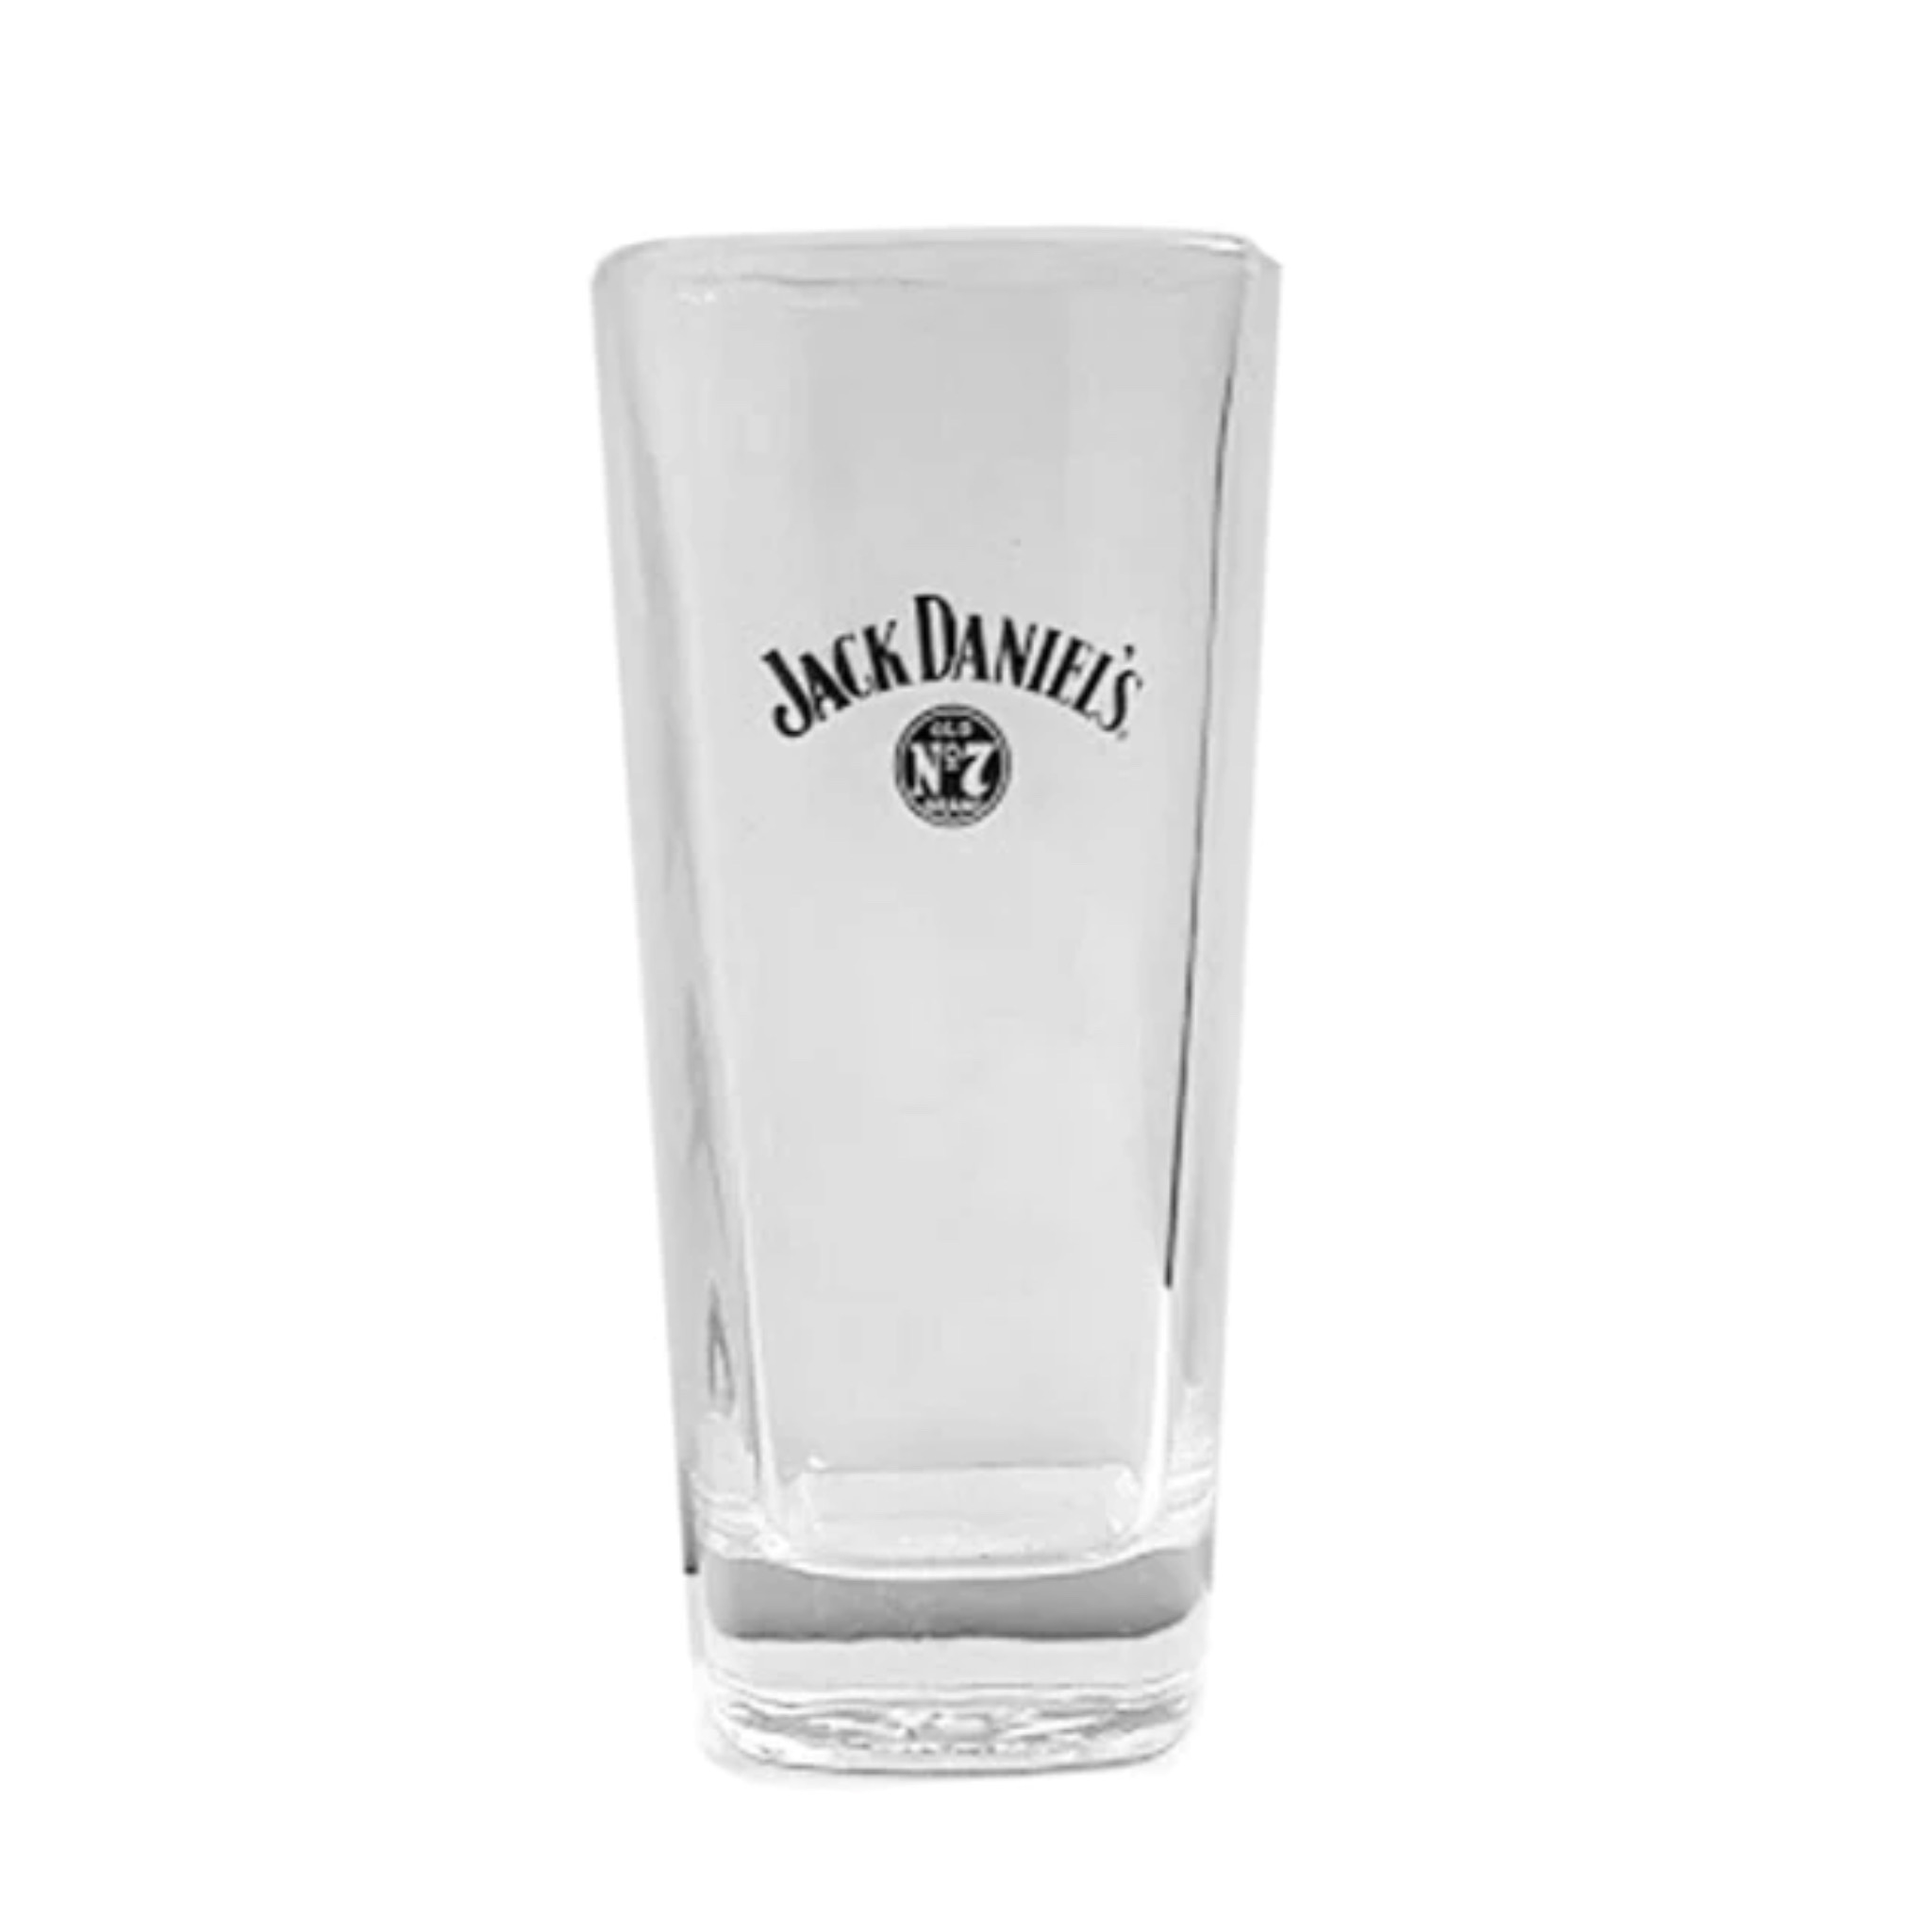 Jack Daniels Highball Whiskey Glass